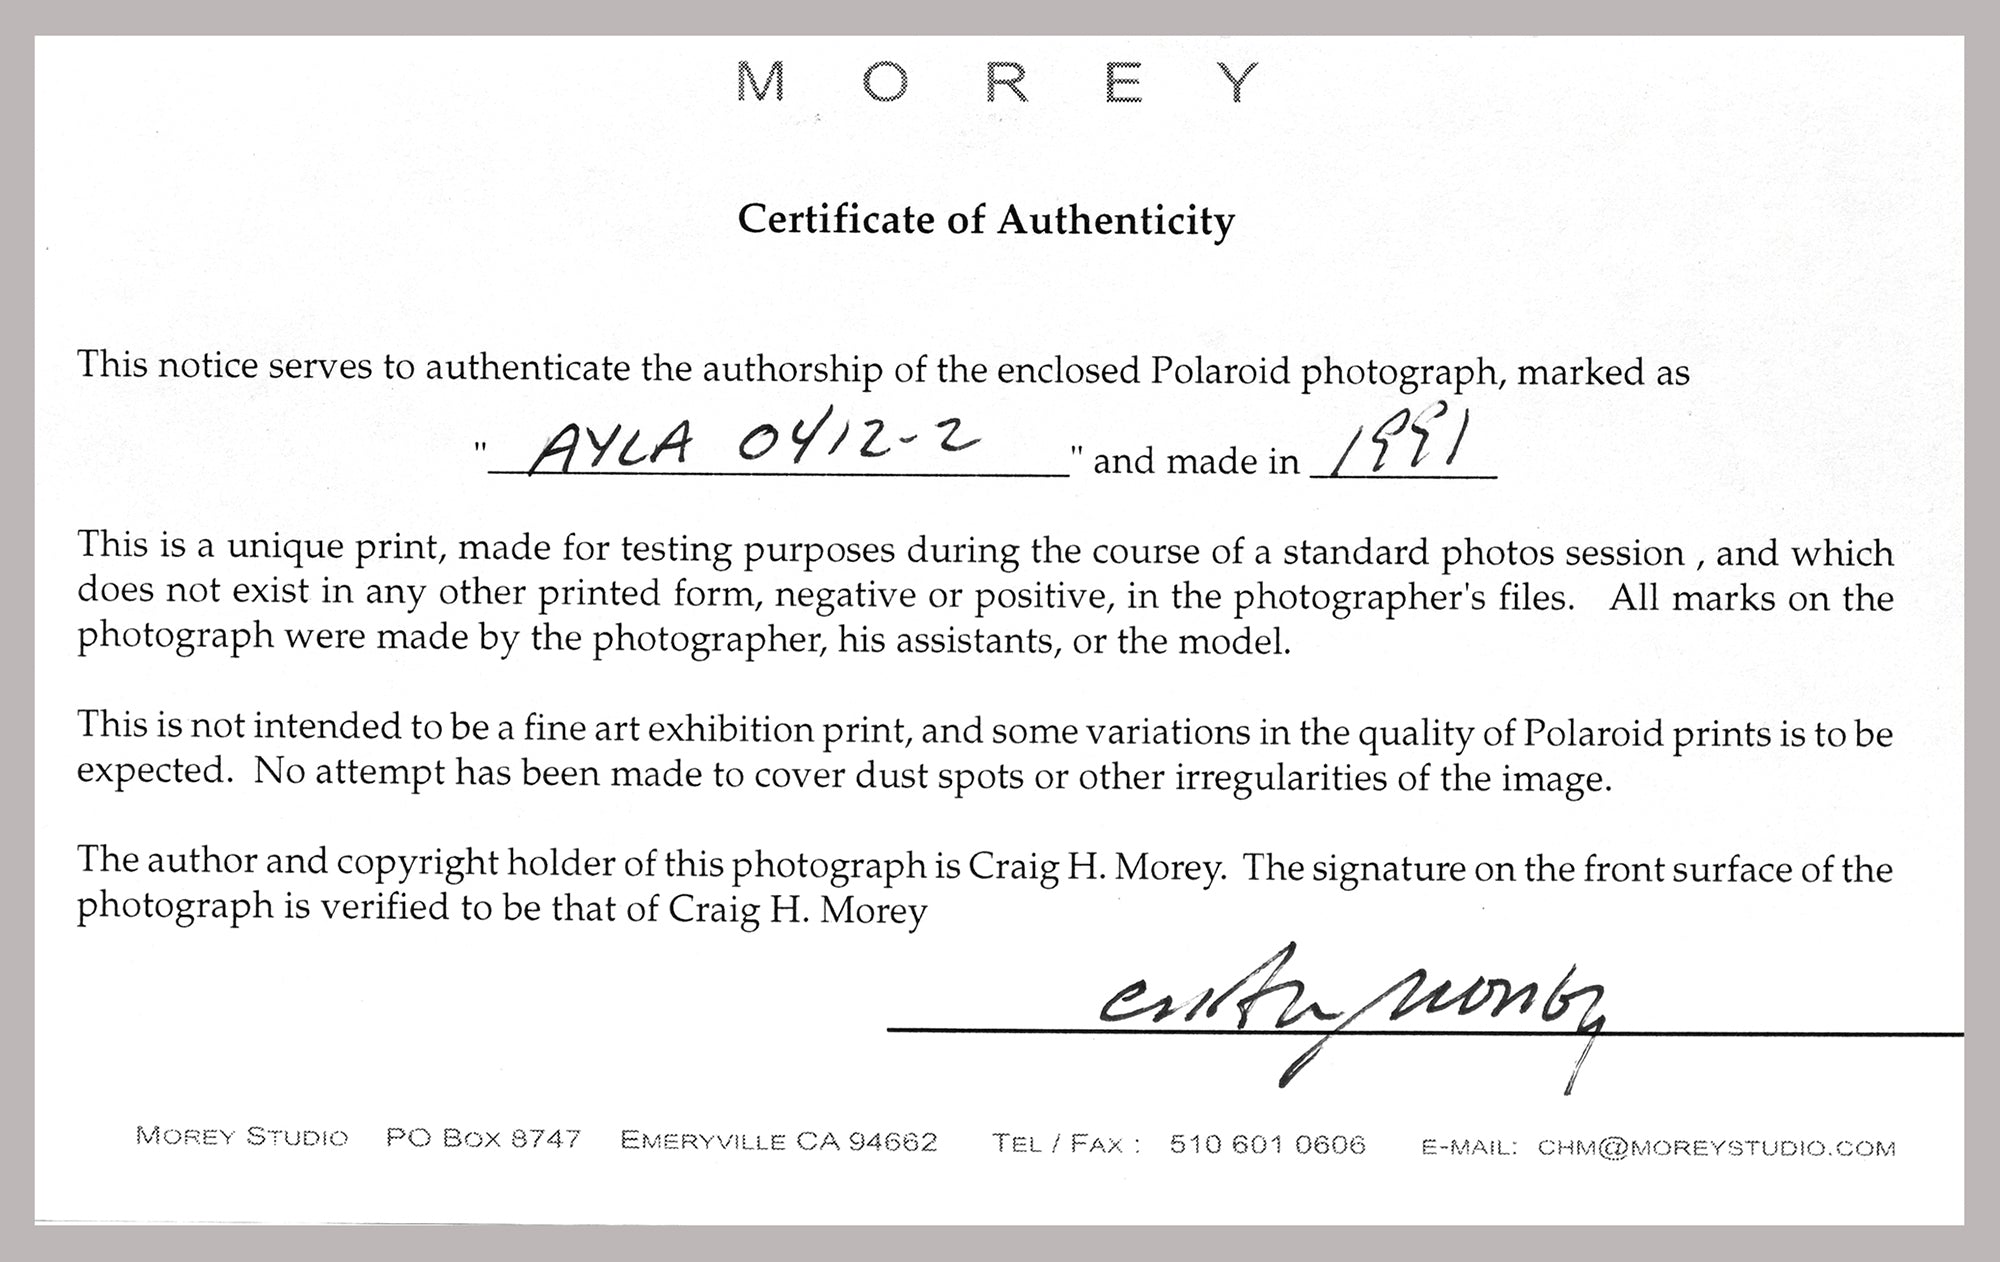 Make Offer - Rare Vintage 1991 One of a Kind Craig Morey Polaroid Test Photograph